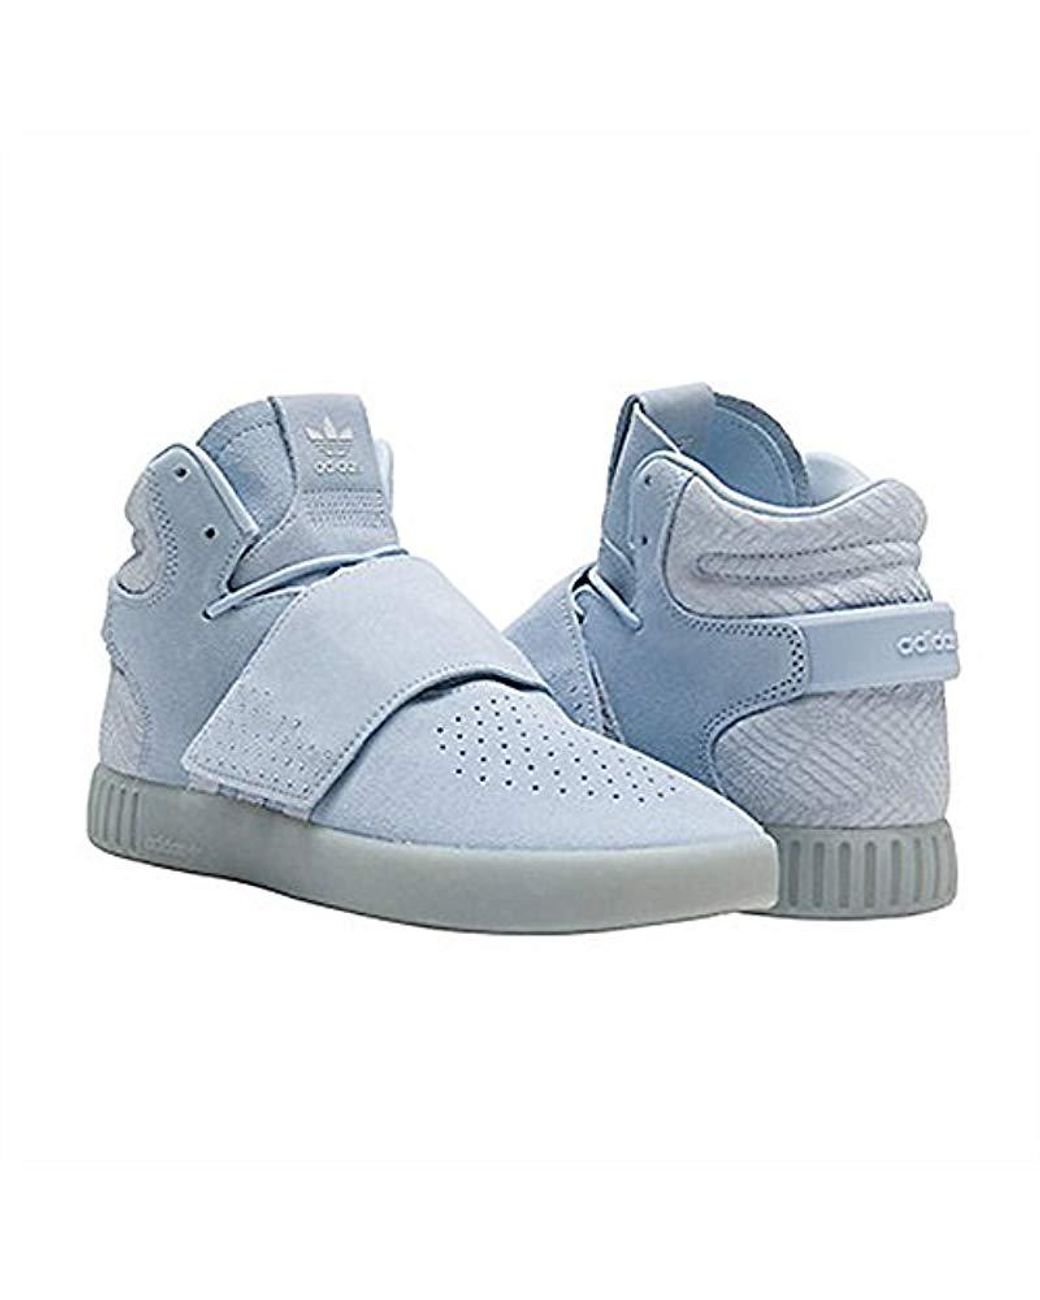 adidas Originals Suede Tubular Invader Strap Shoes in Light Blue (Blue) |  Lyst